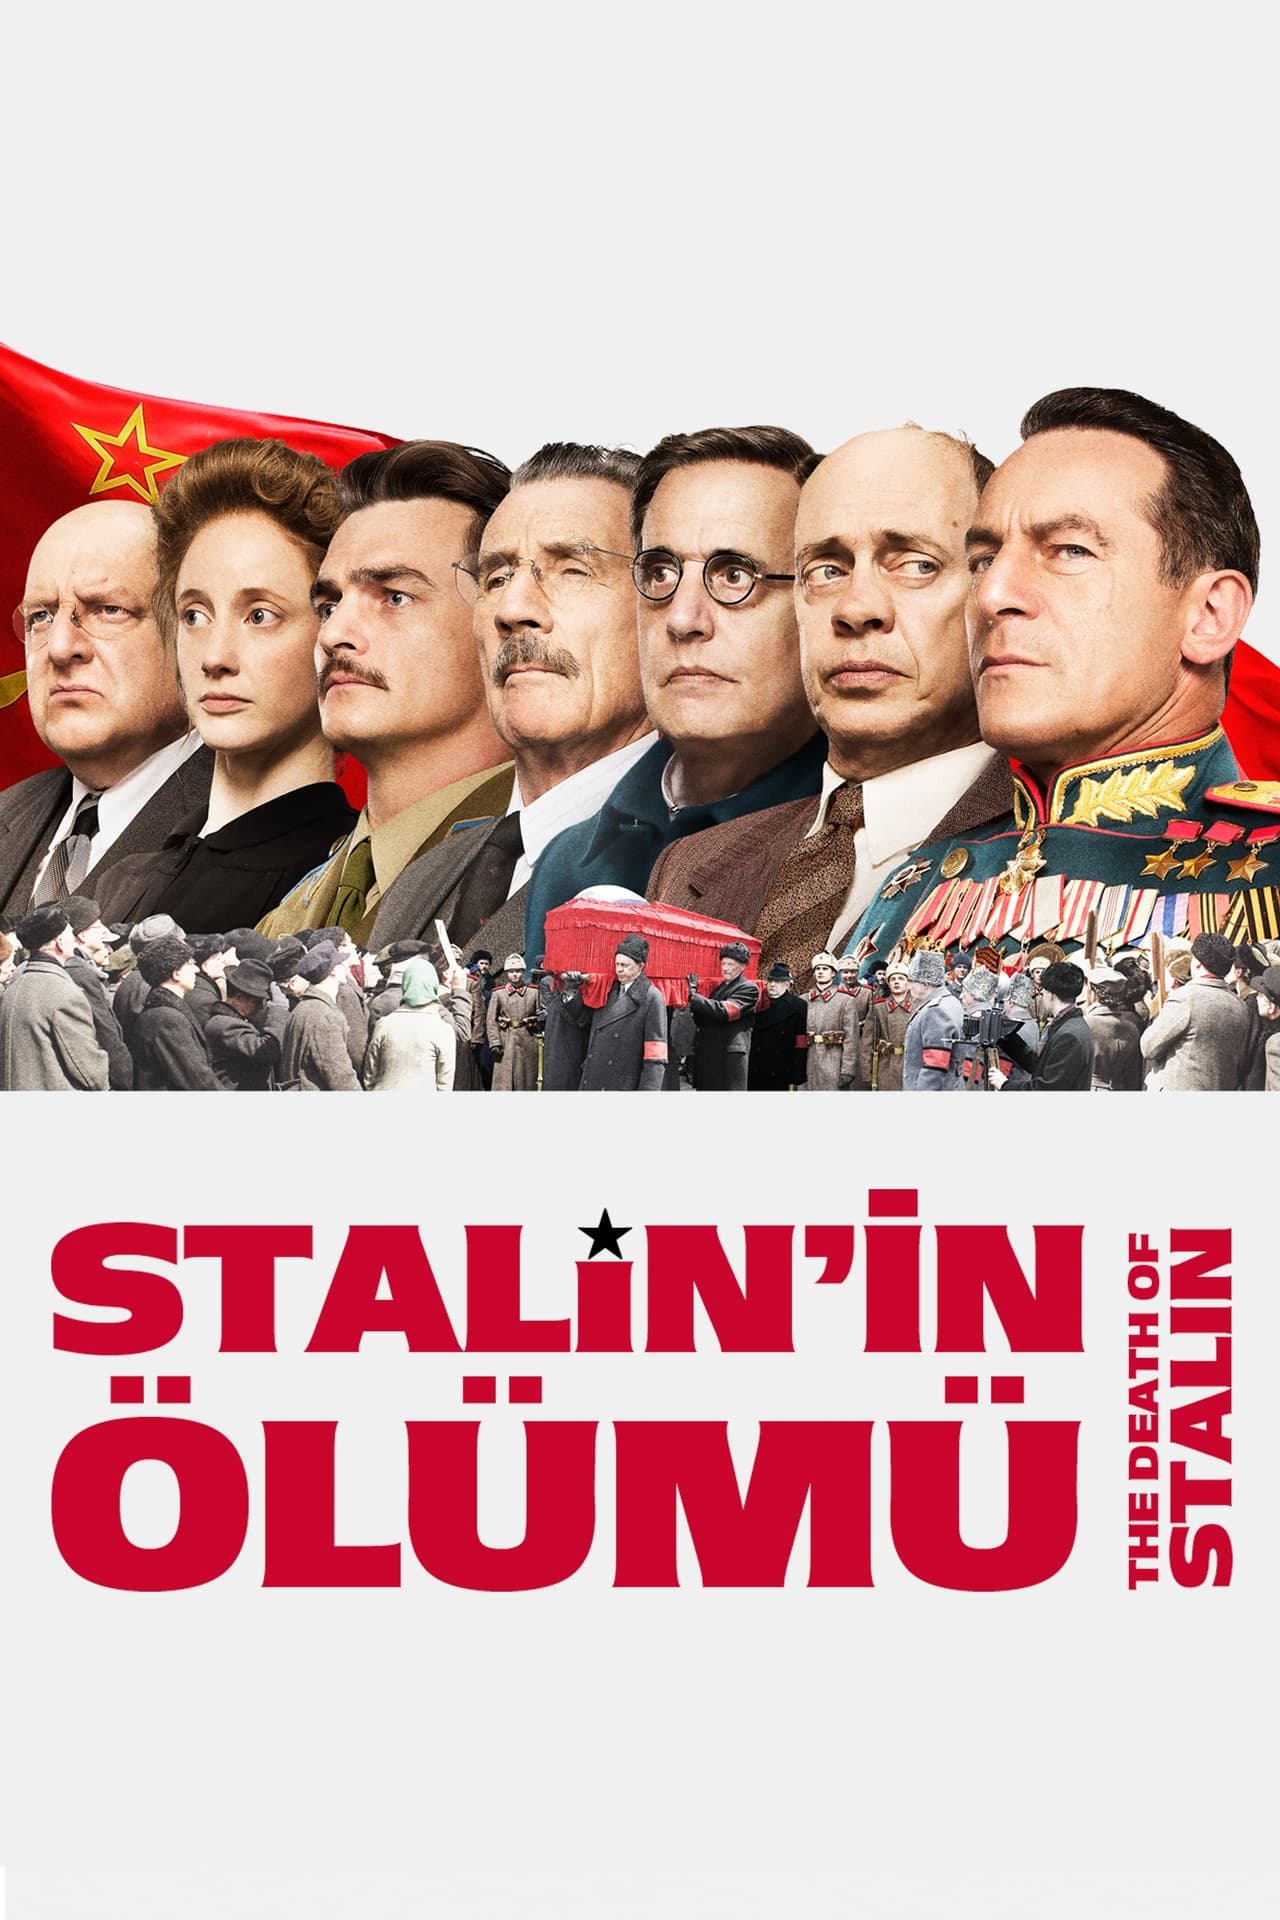 The Death of Stalin (2017) 192Kbps 24Fps 48Khz 2.0Ch DigitalTV Turkish Audio TAC